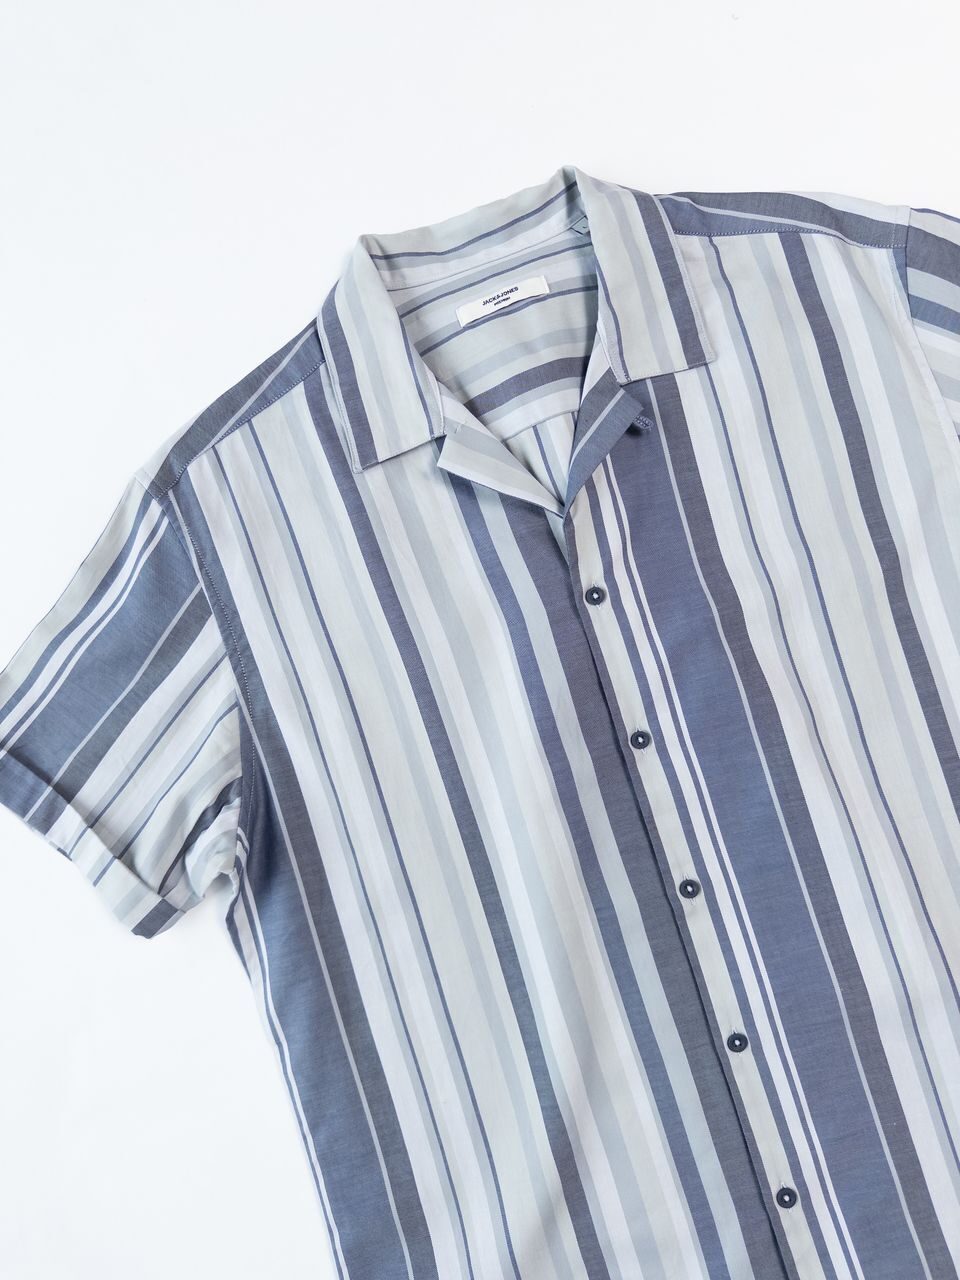 Рубашка мужская на пуговицах цвет серый/полоска размер L Jack&Jones